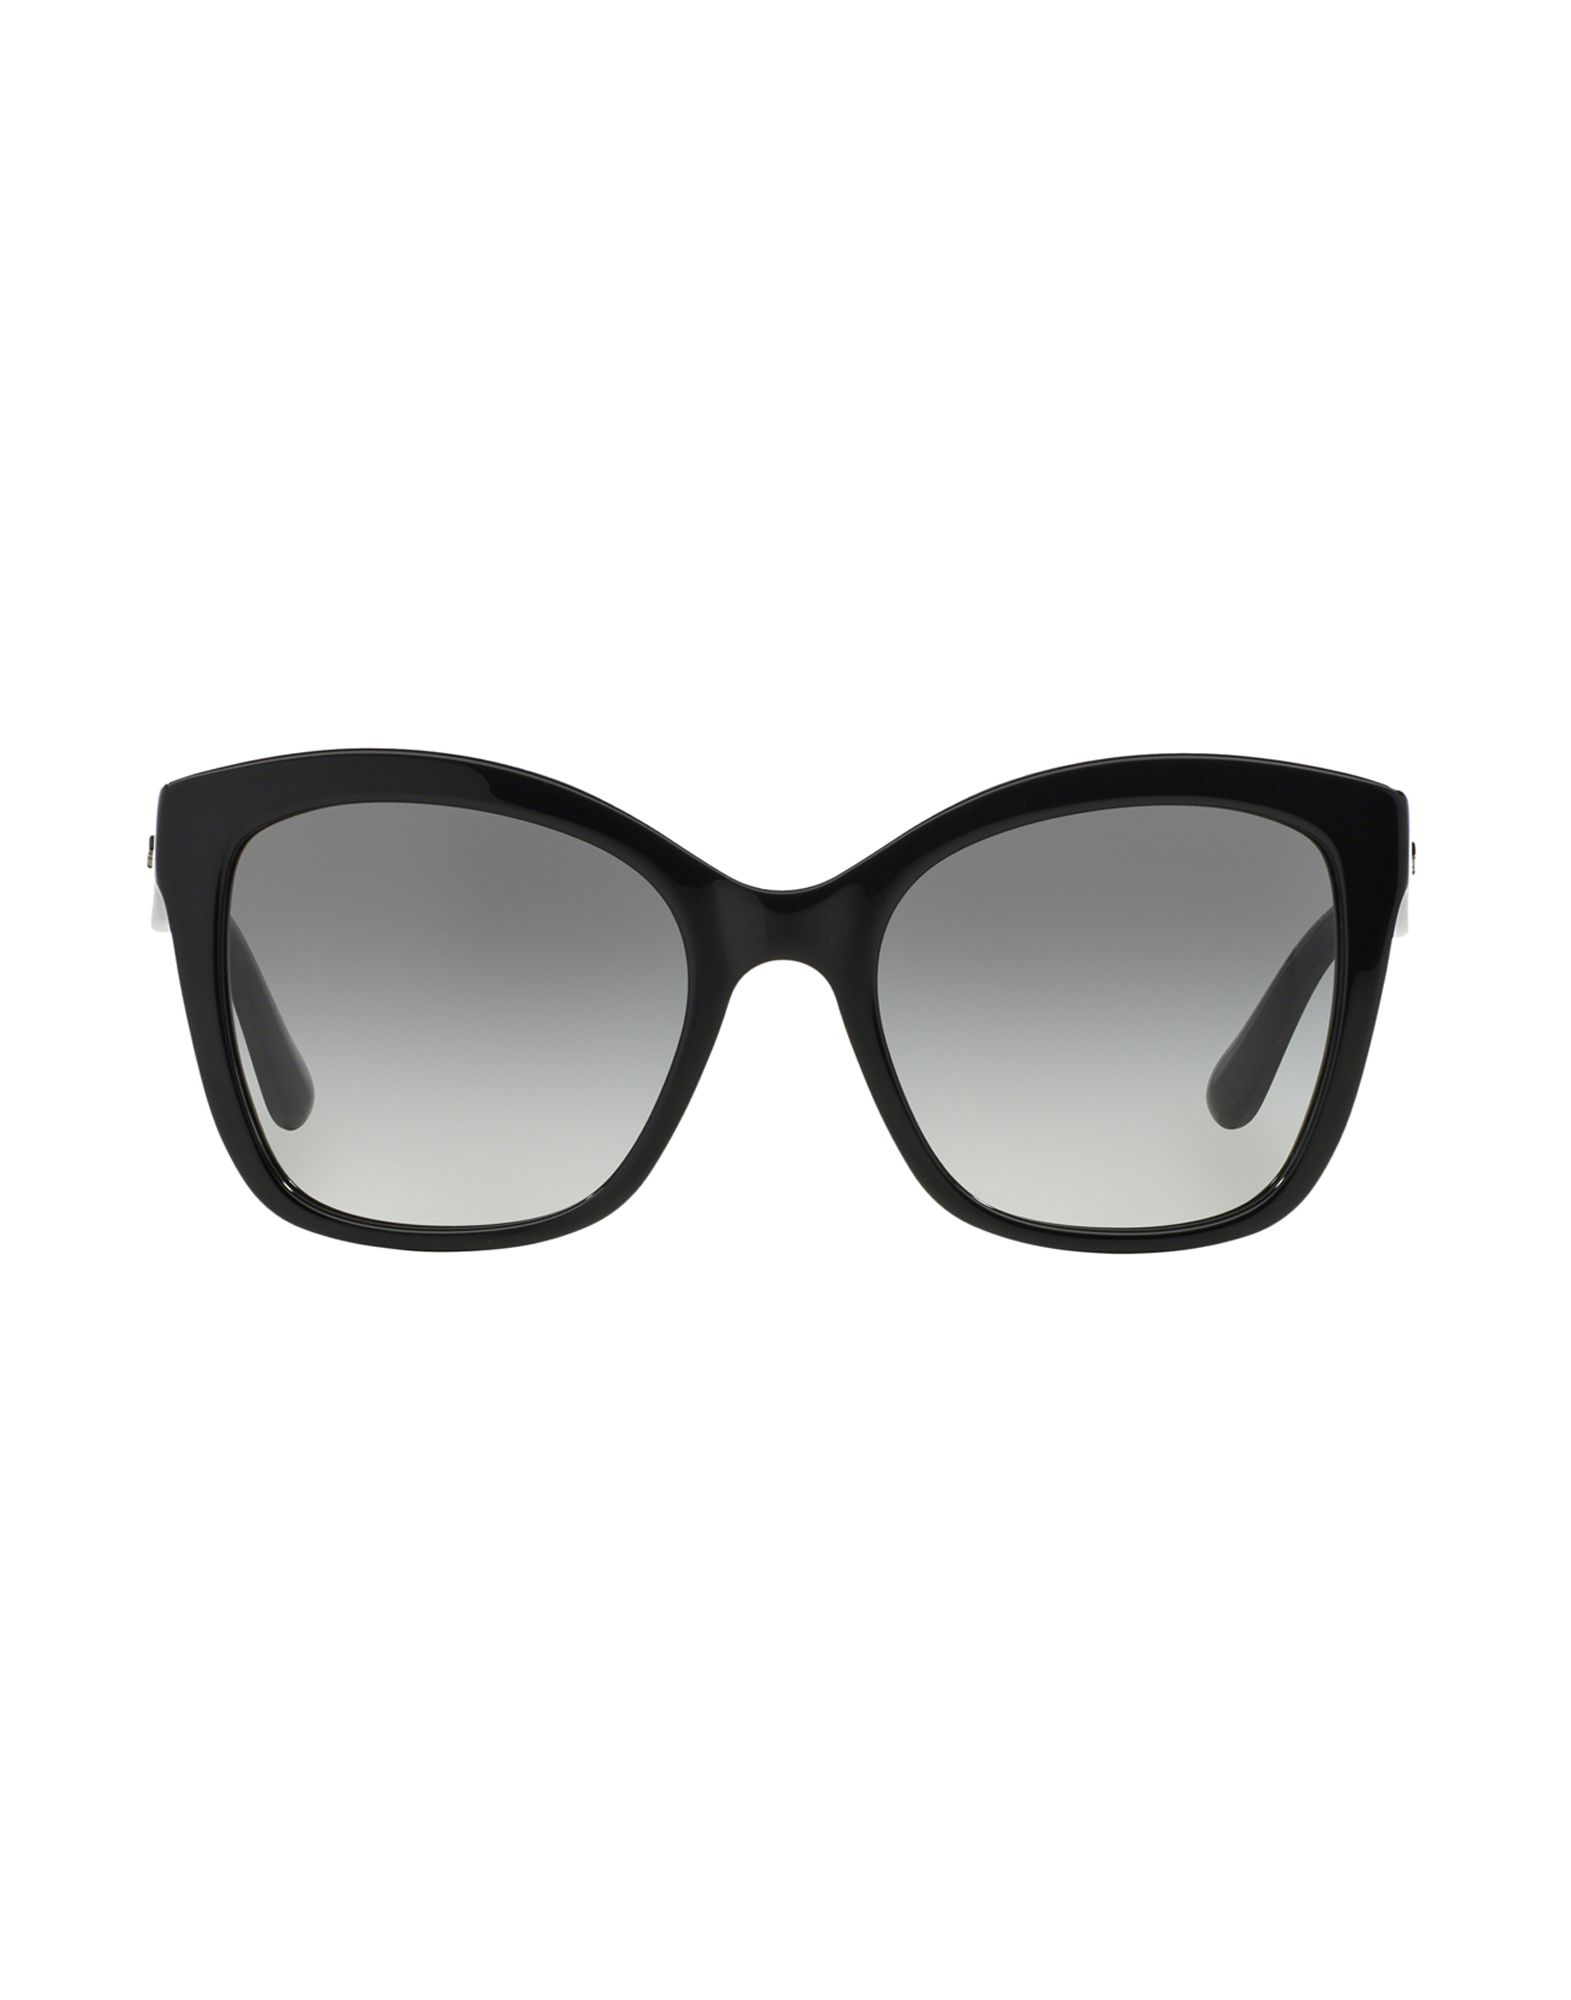 Dolce & gabbana Sunglasses in Black | Lyst